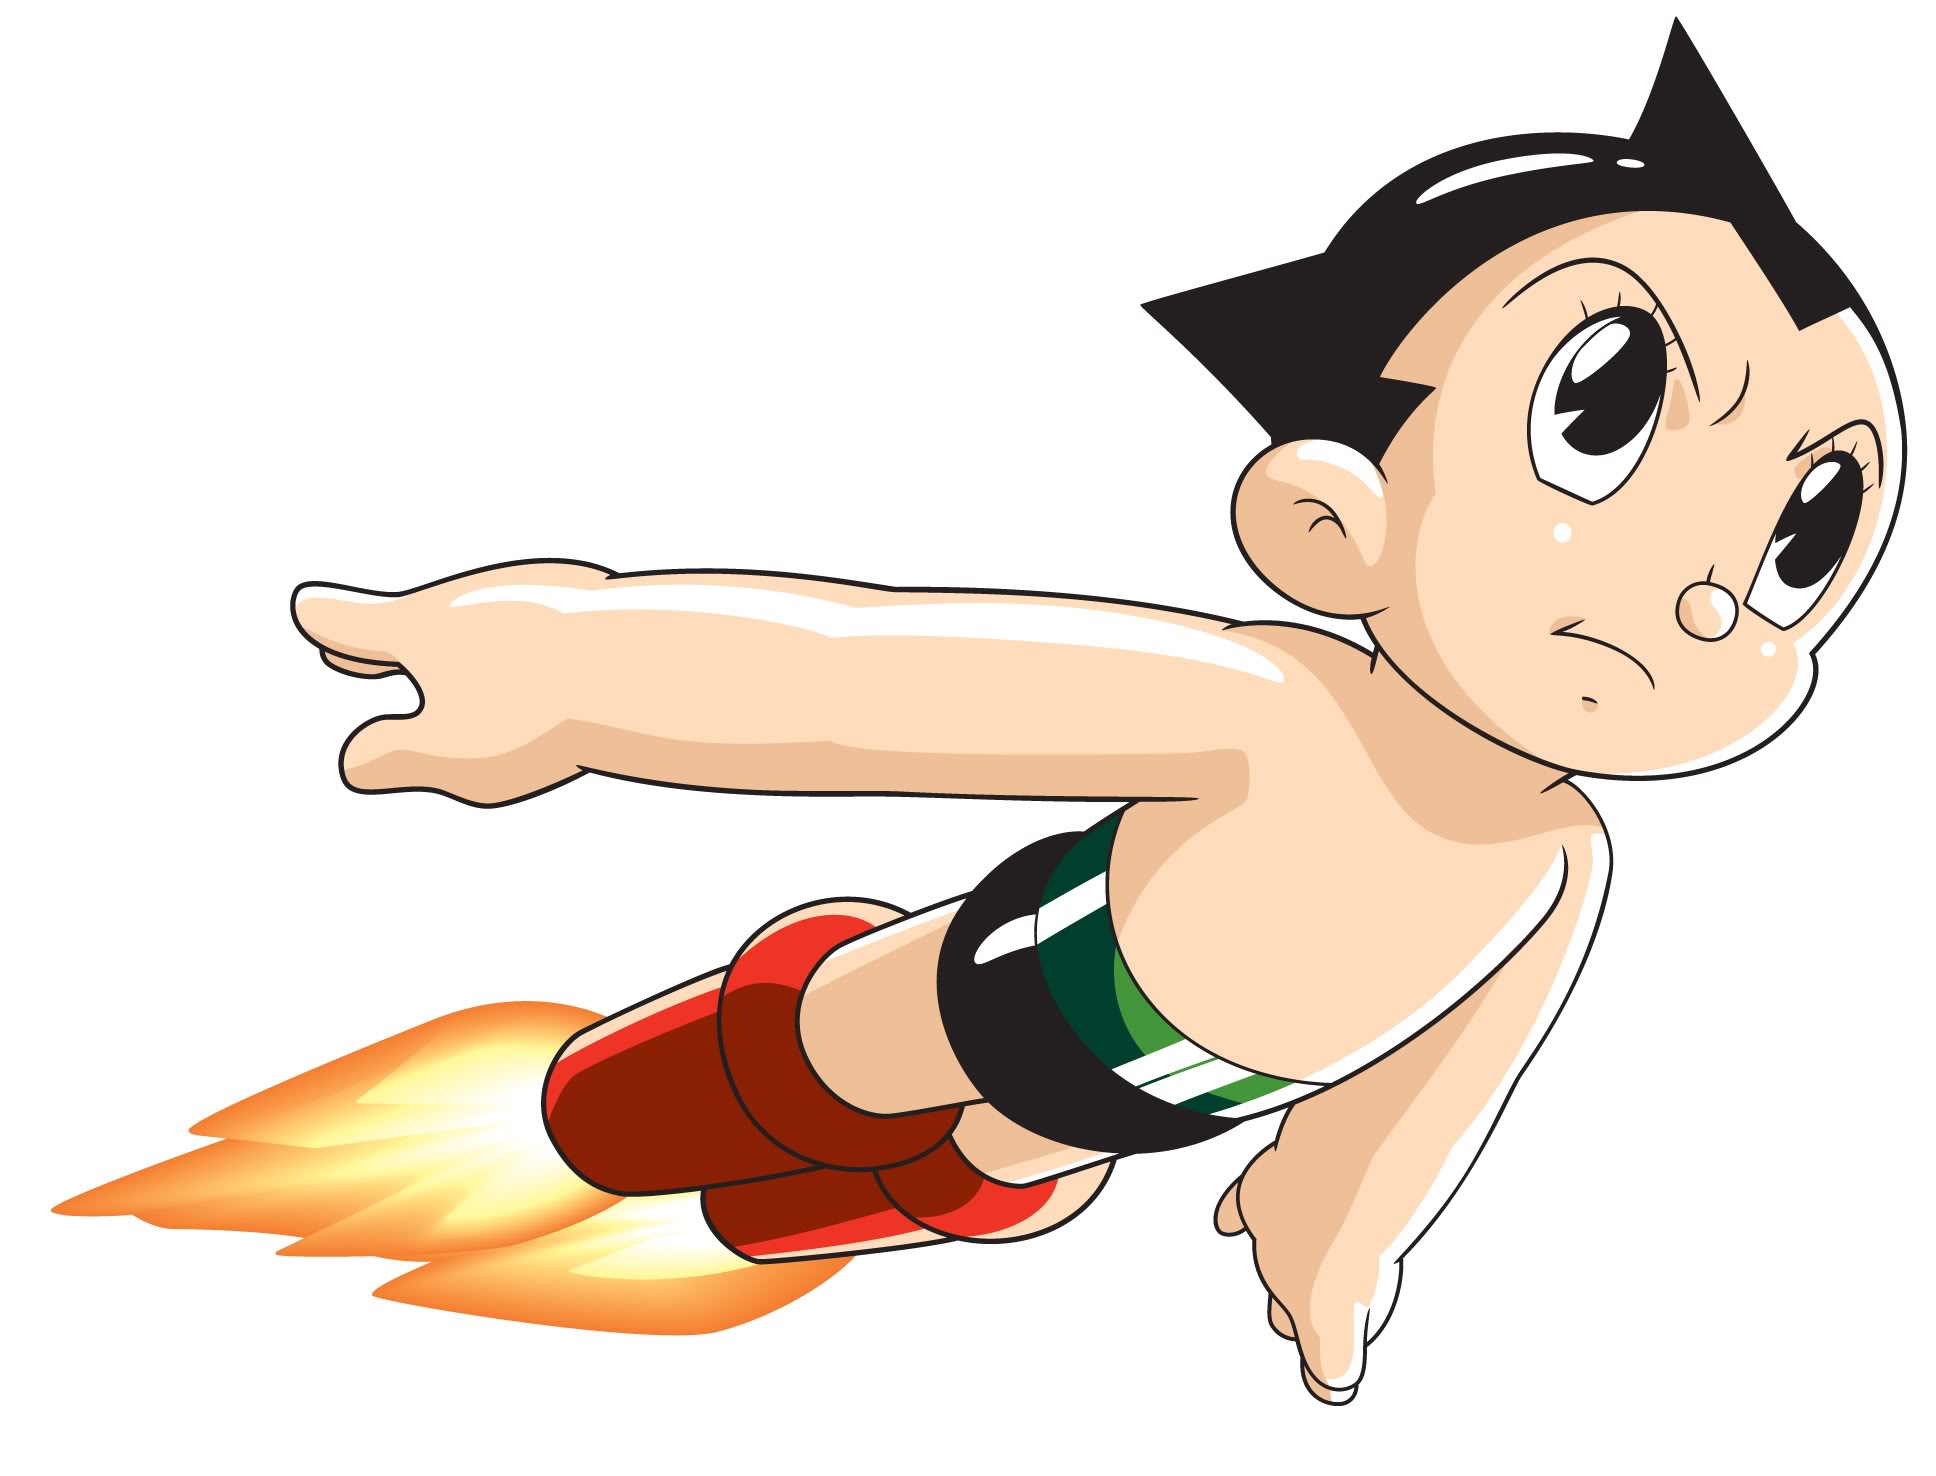 Astro Boy (character), Astro Boy Wiki